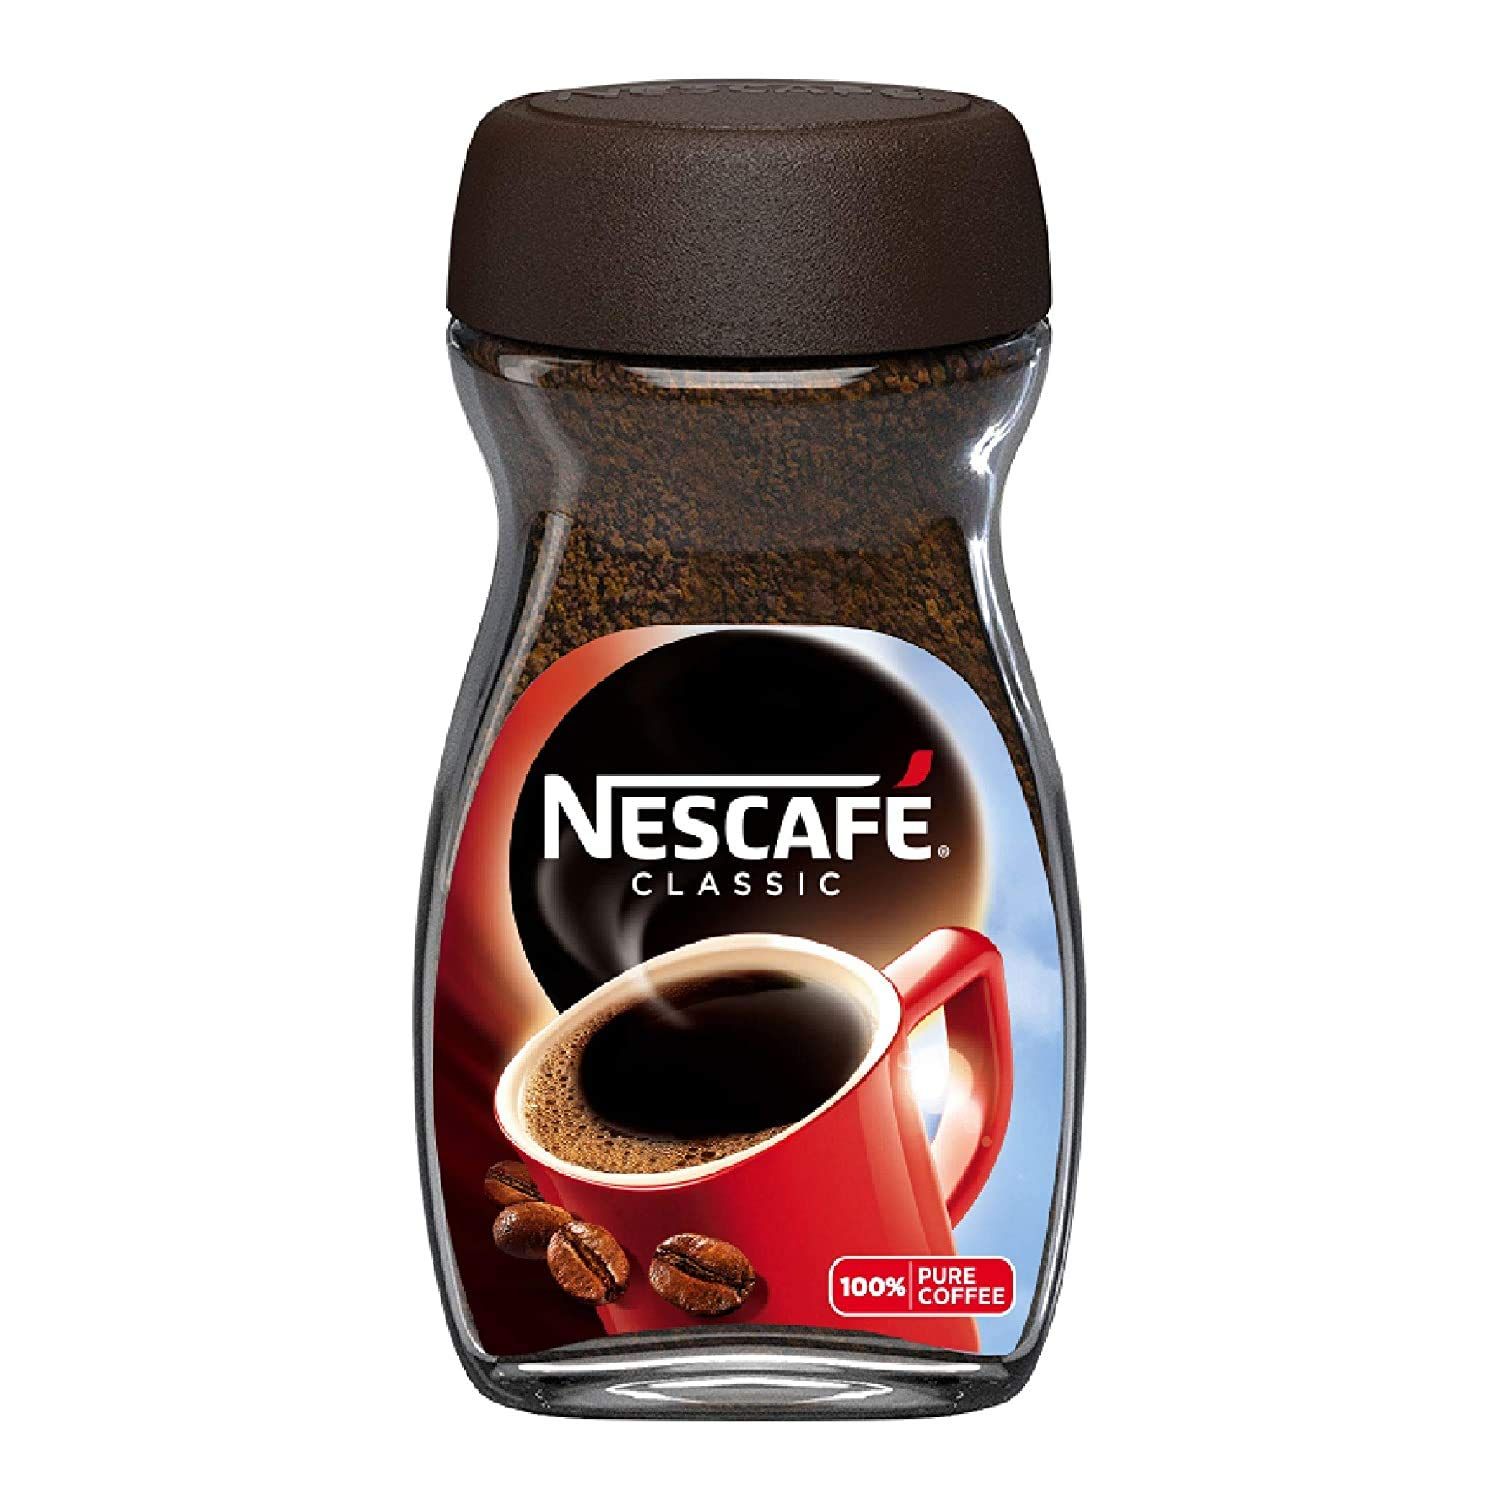 Nescafe Classic Coffee Image